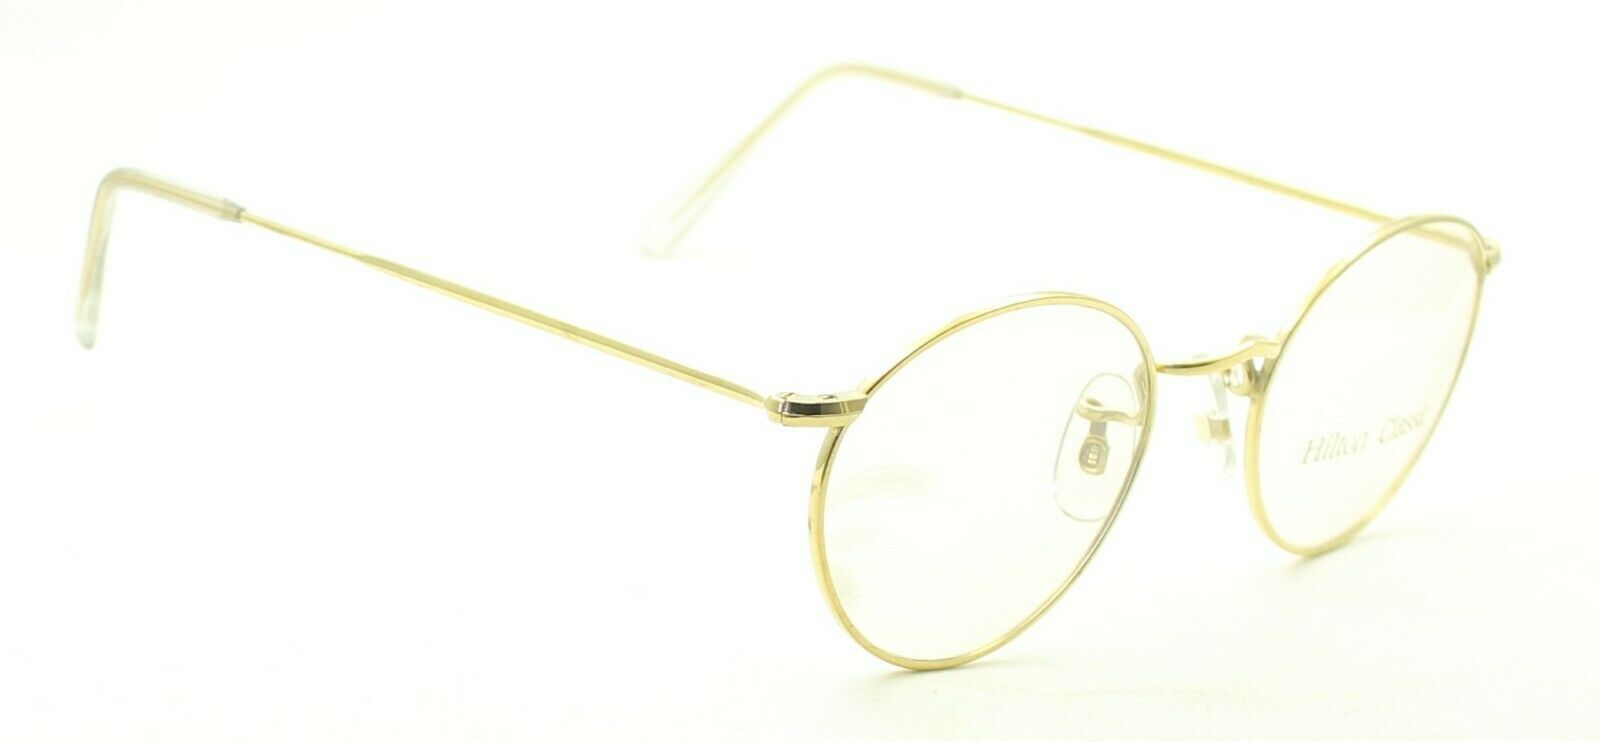 Hilton Classic 5 1038 Gold Oval 47x20mm FRAMES RX Optical Glasses Eyewear - New